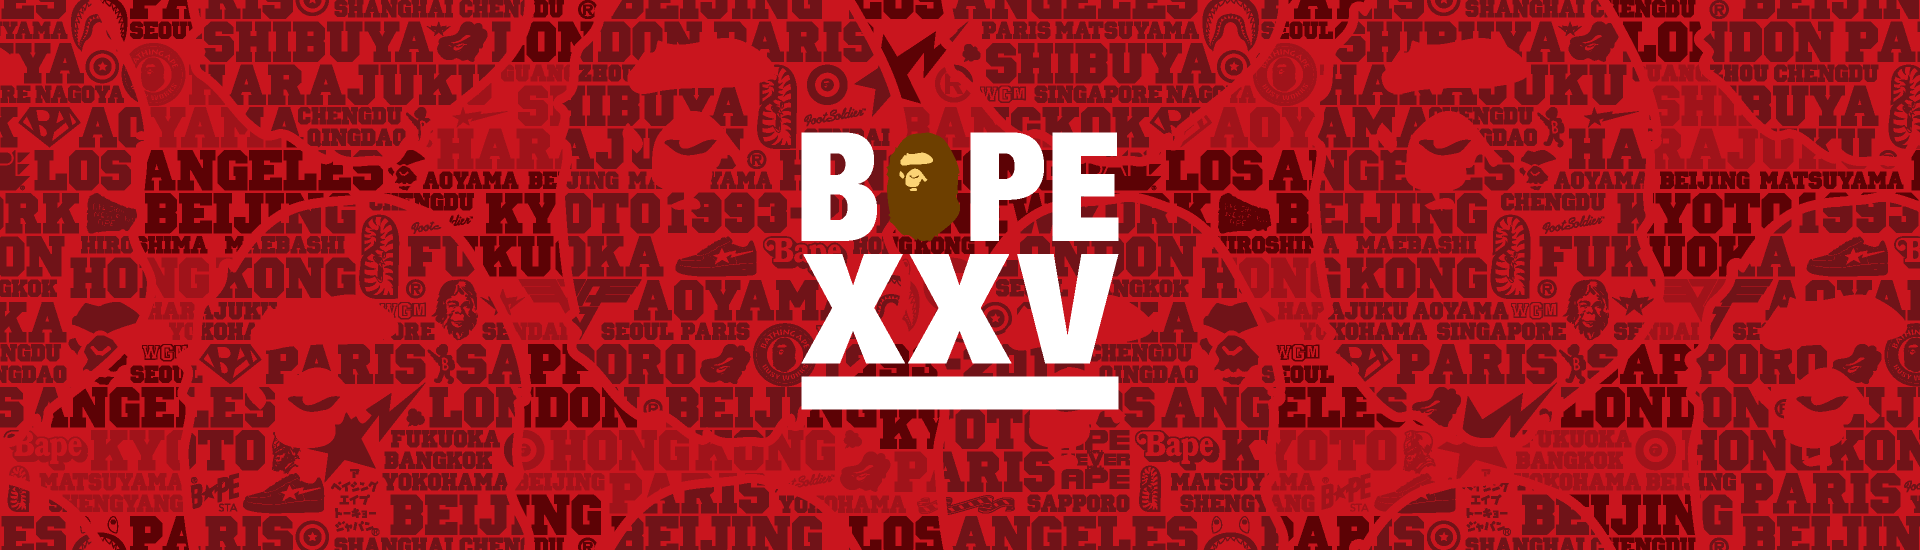 BAPE XXV